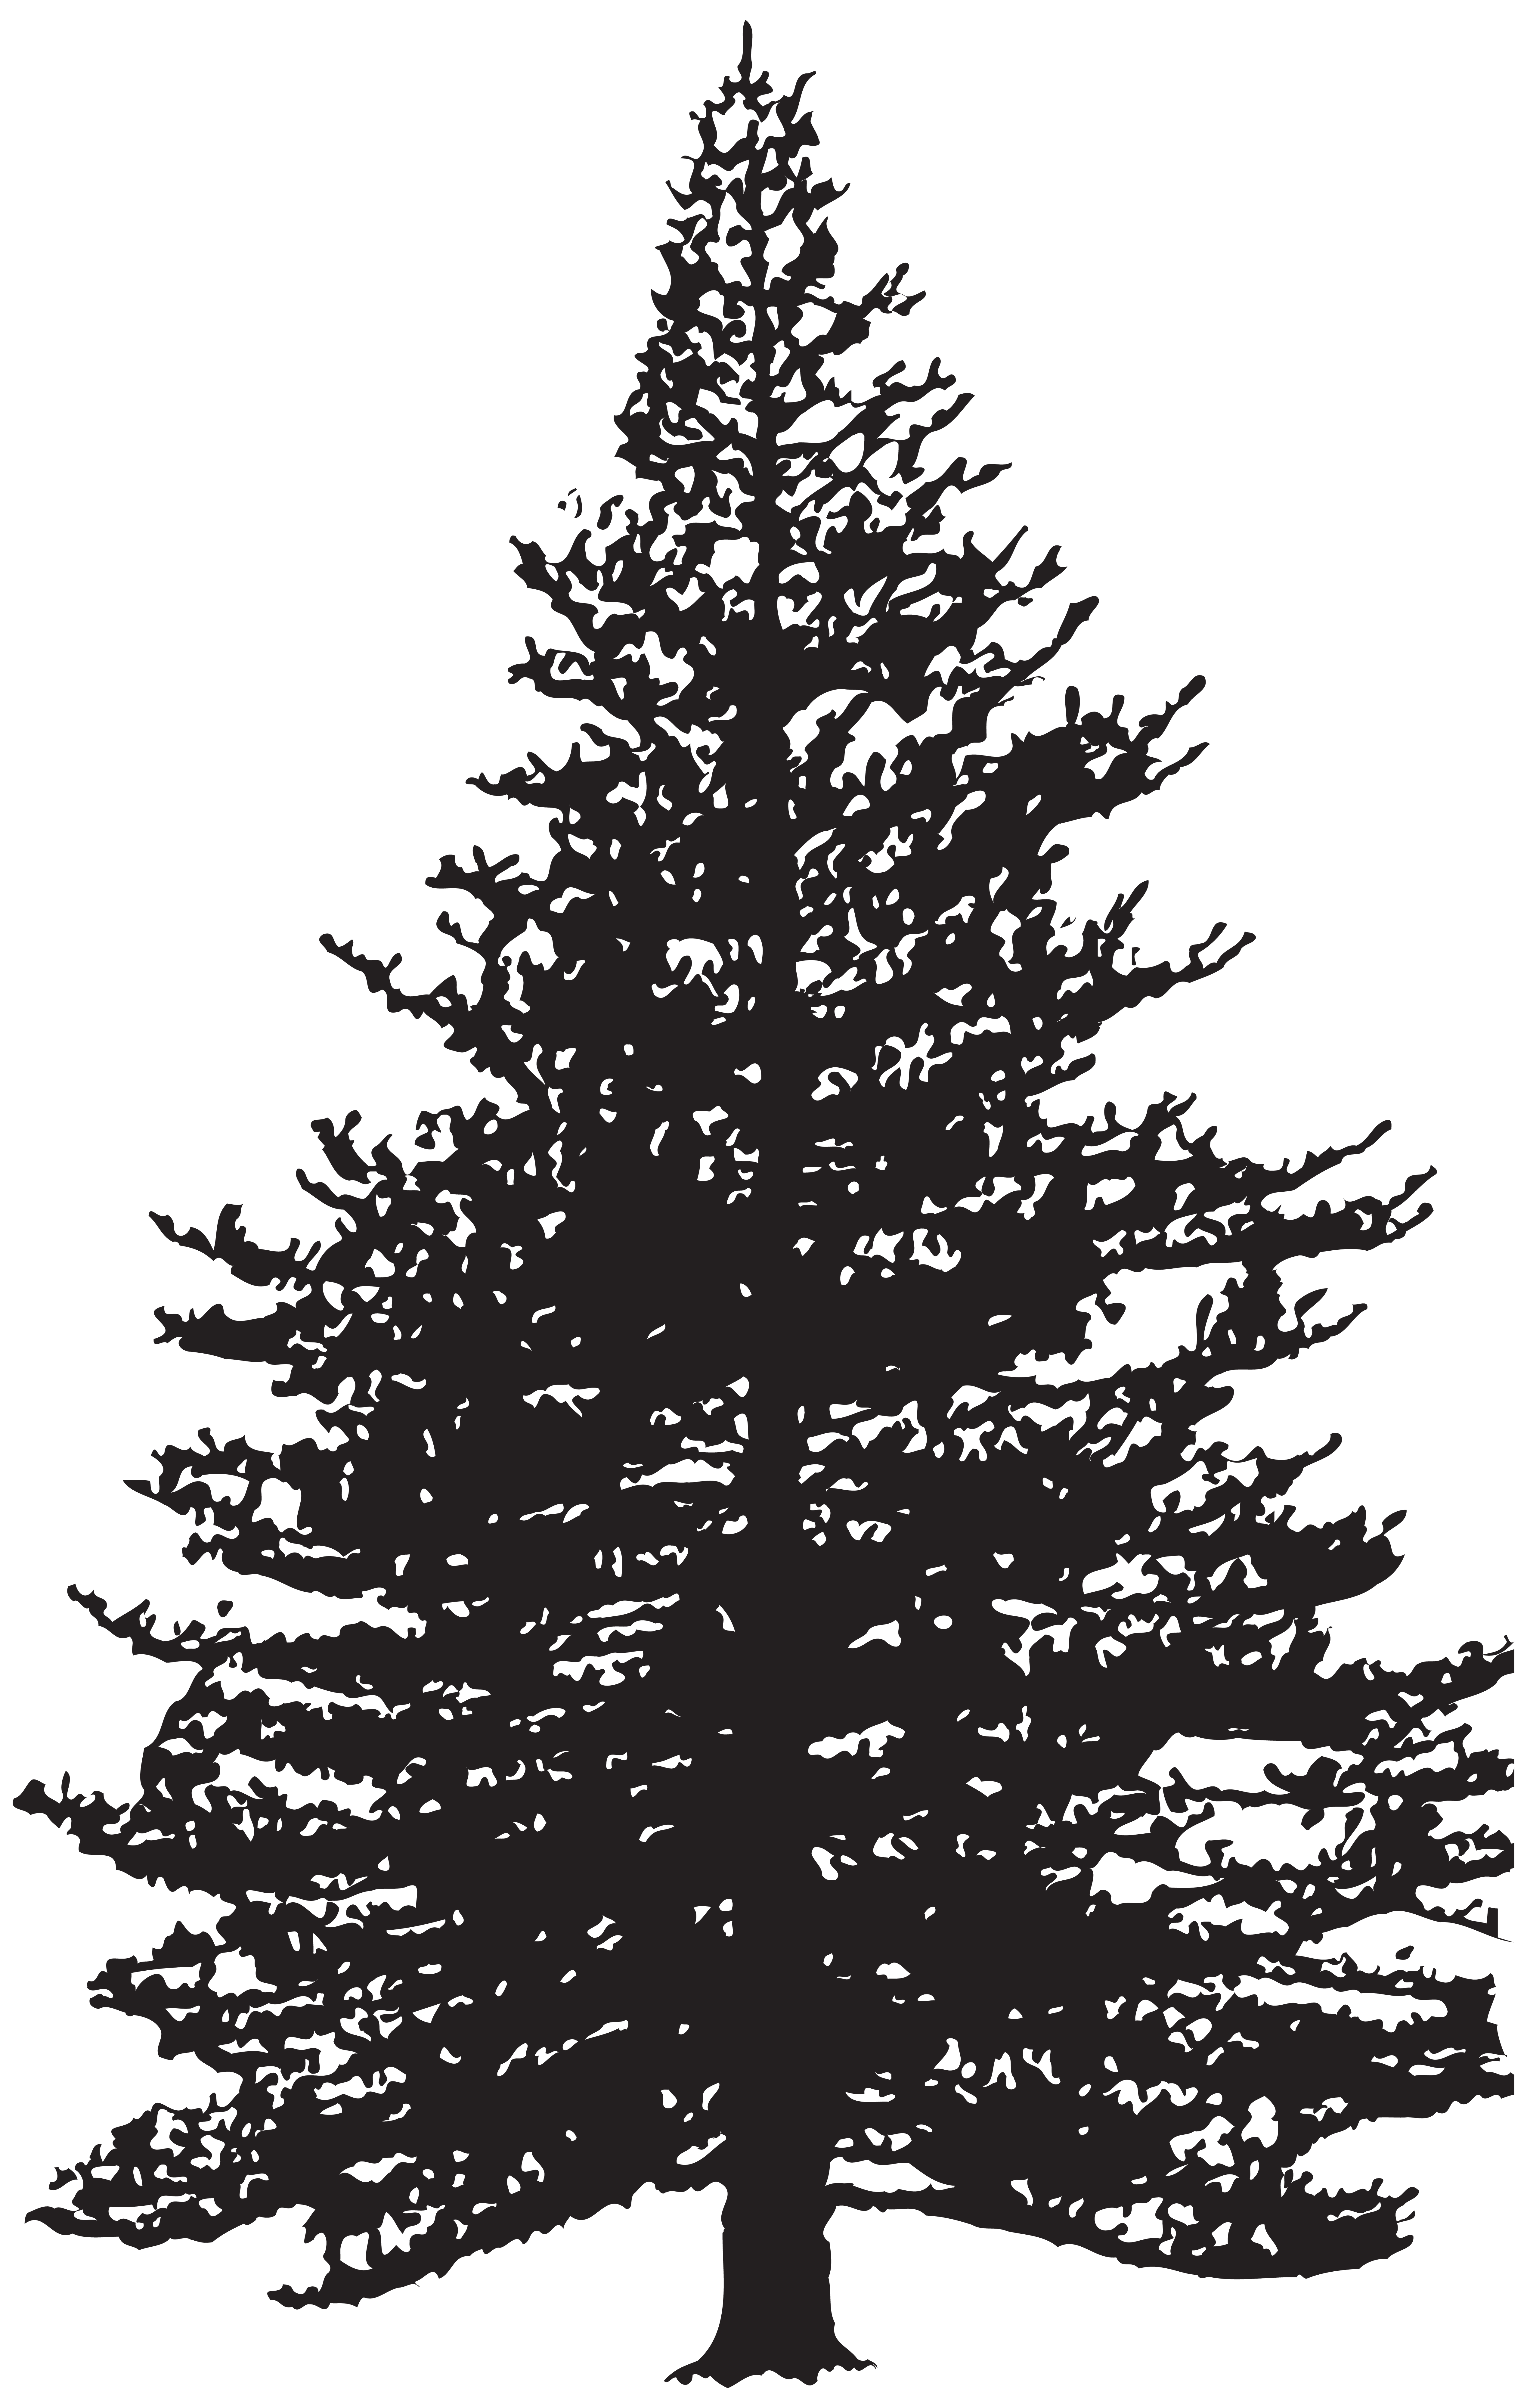 clipart tree pine